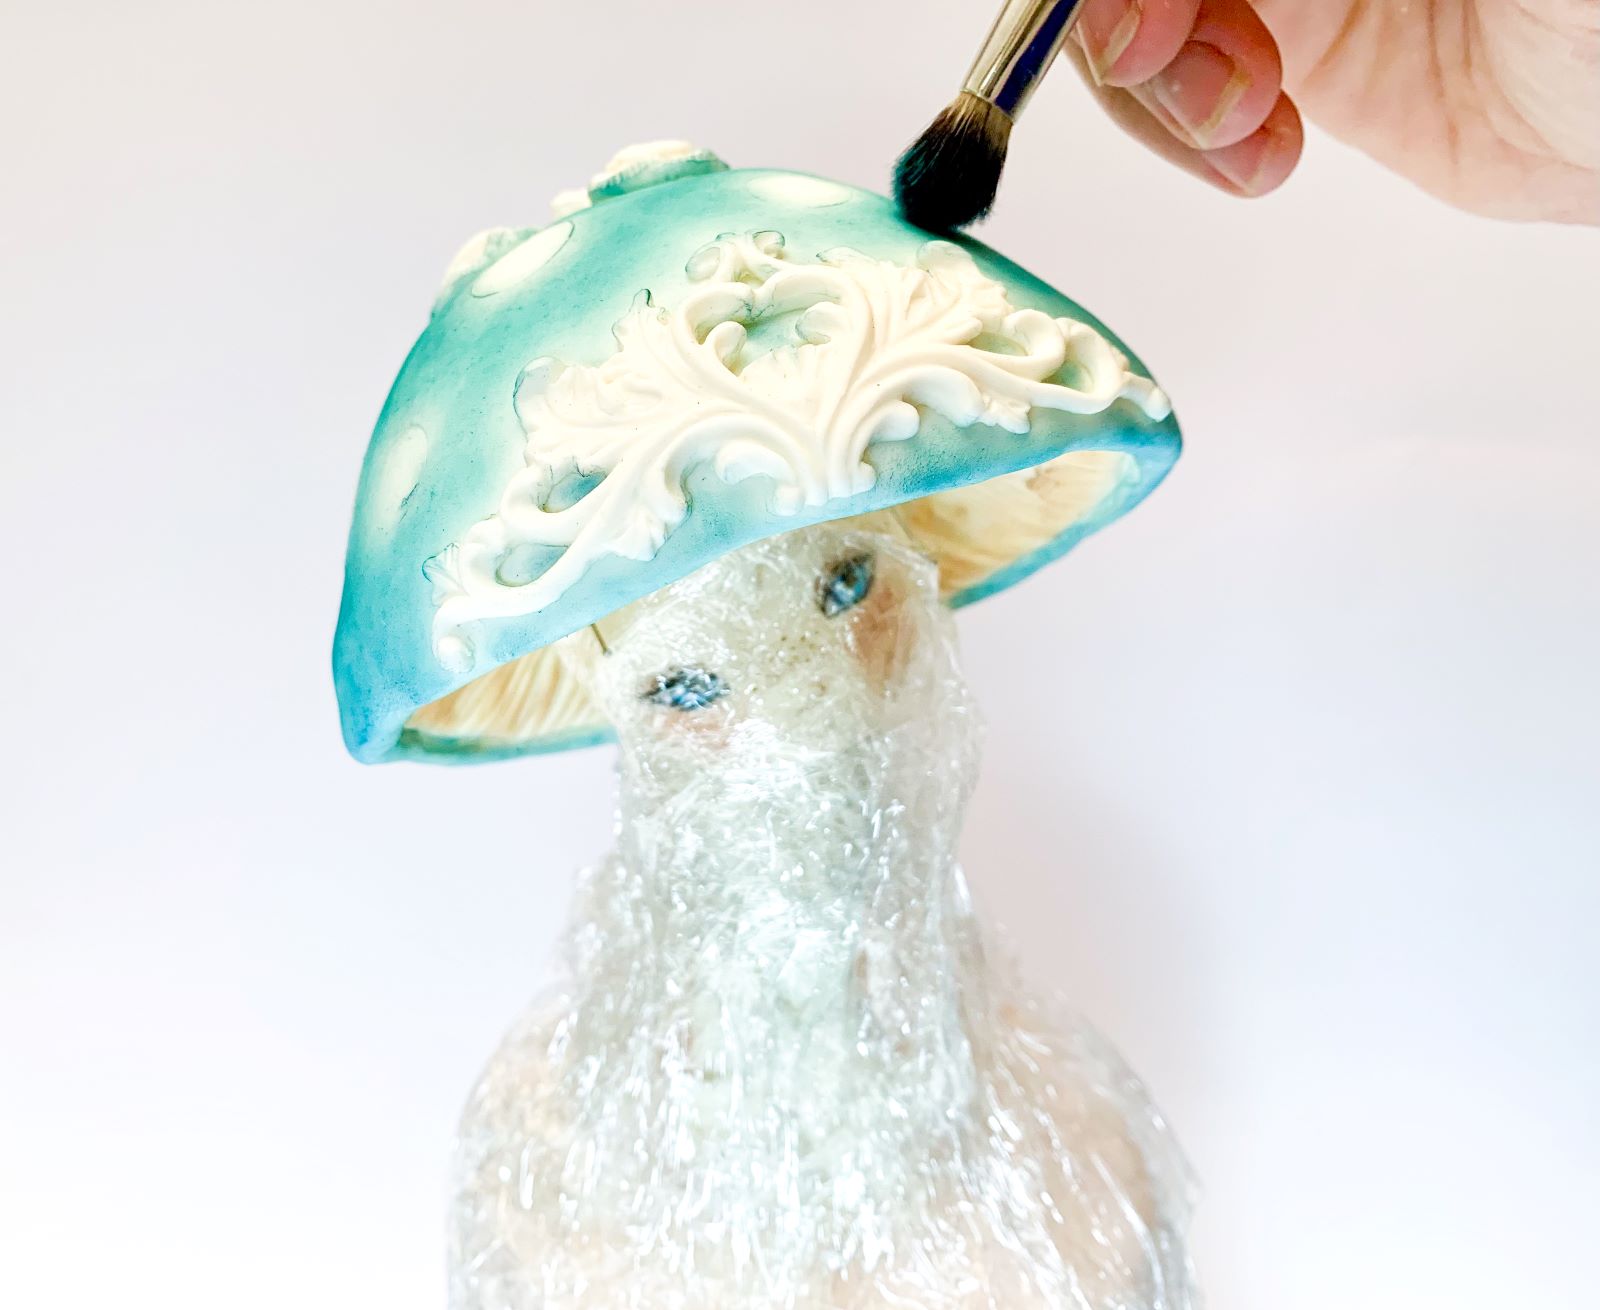 Shape and paint a realistic mushroom cap